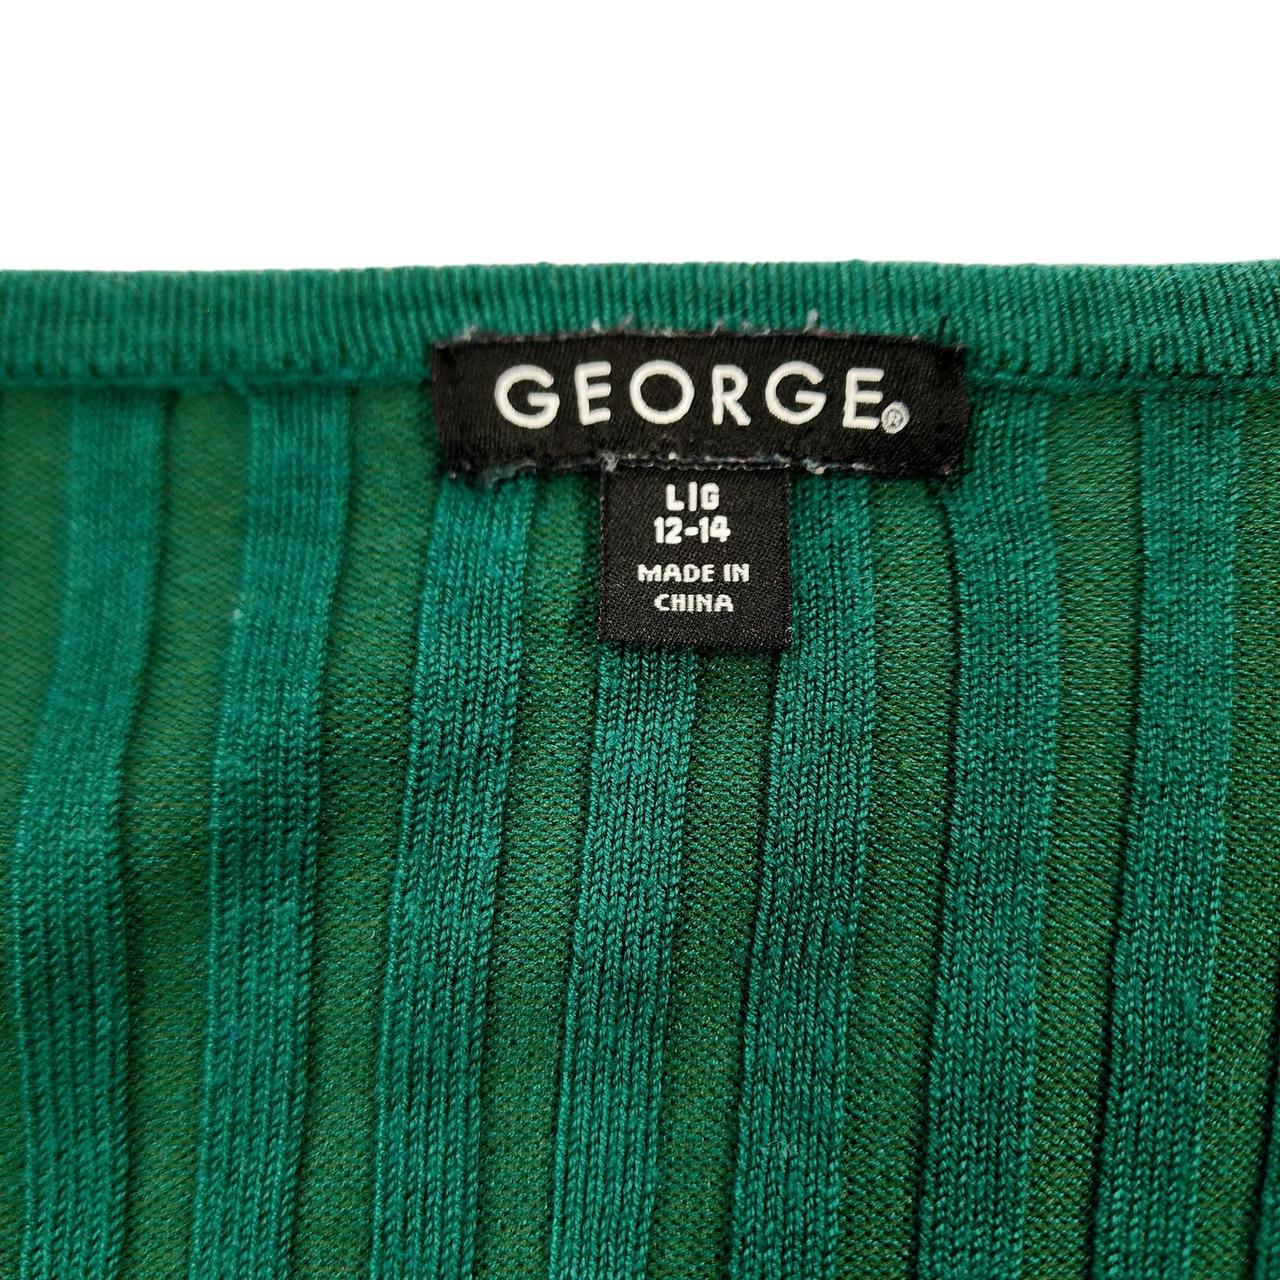 George Ribbed Knit Sweater Women L 12 - 14 Forrest... - Depop